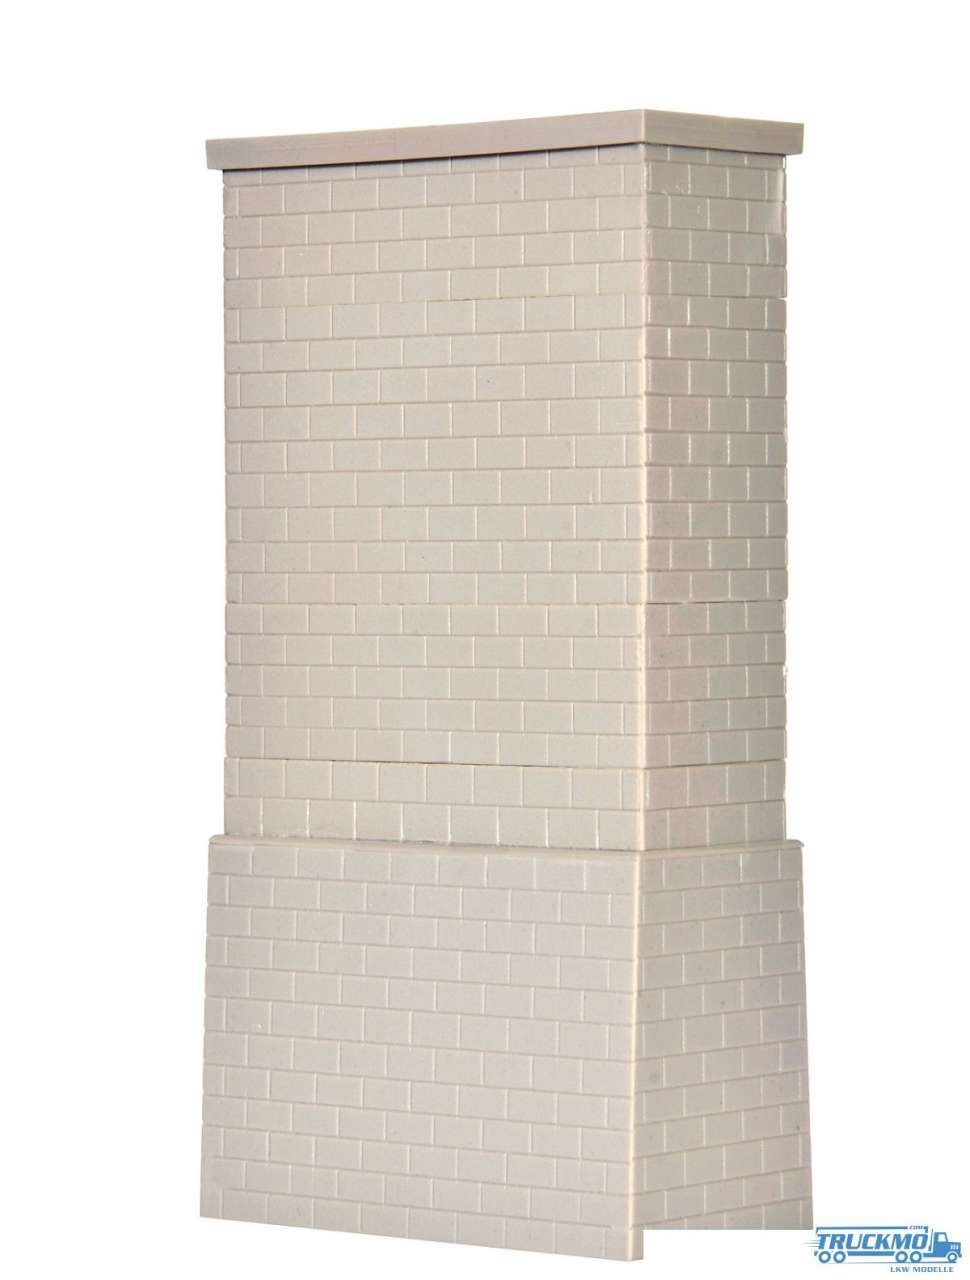 Kibri Universal Bridge Central Pillar, bricked 39752